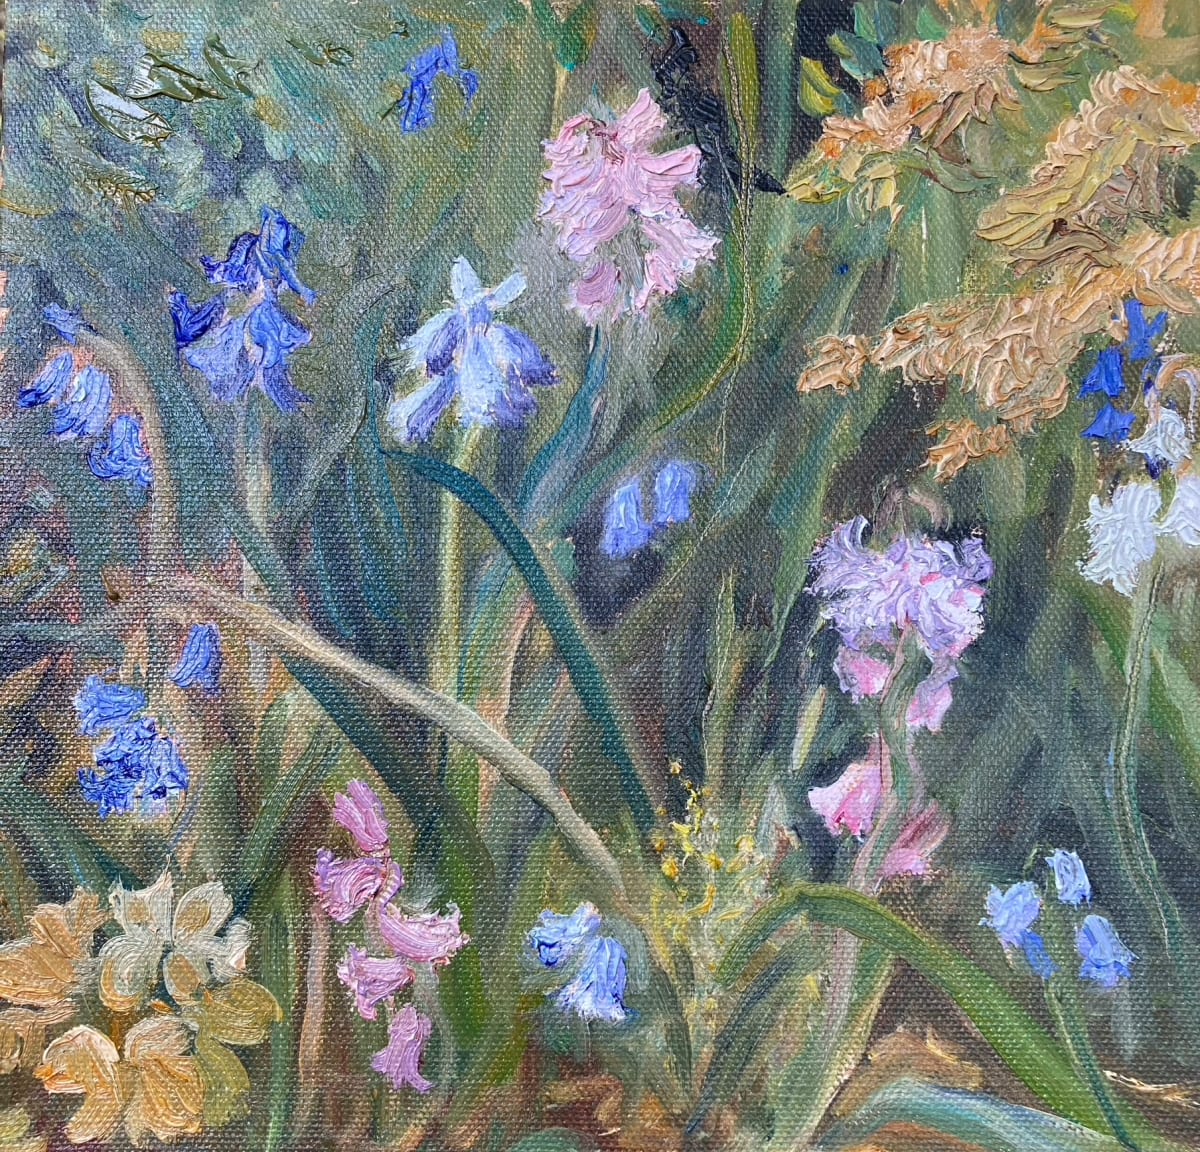 Wood Hyacinths by Katherine Farrell 